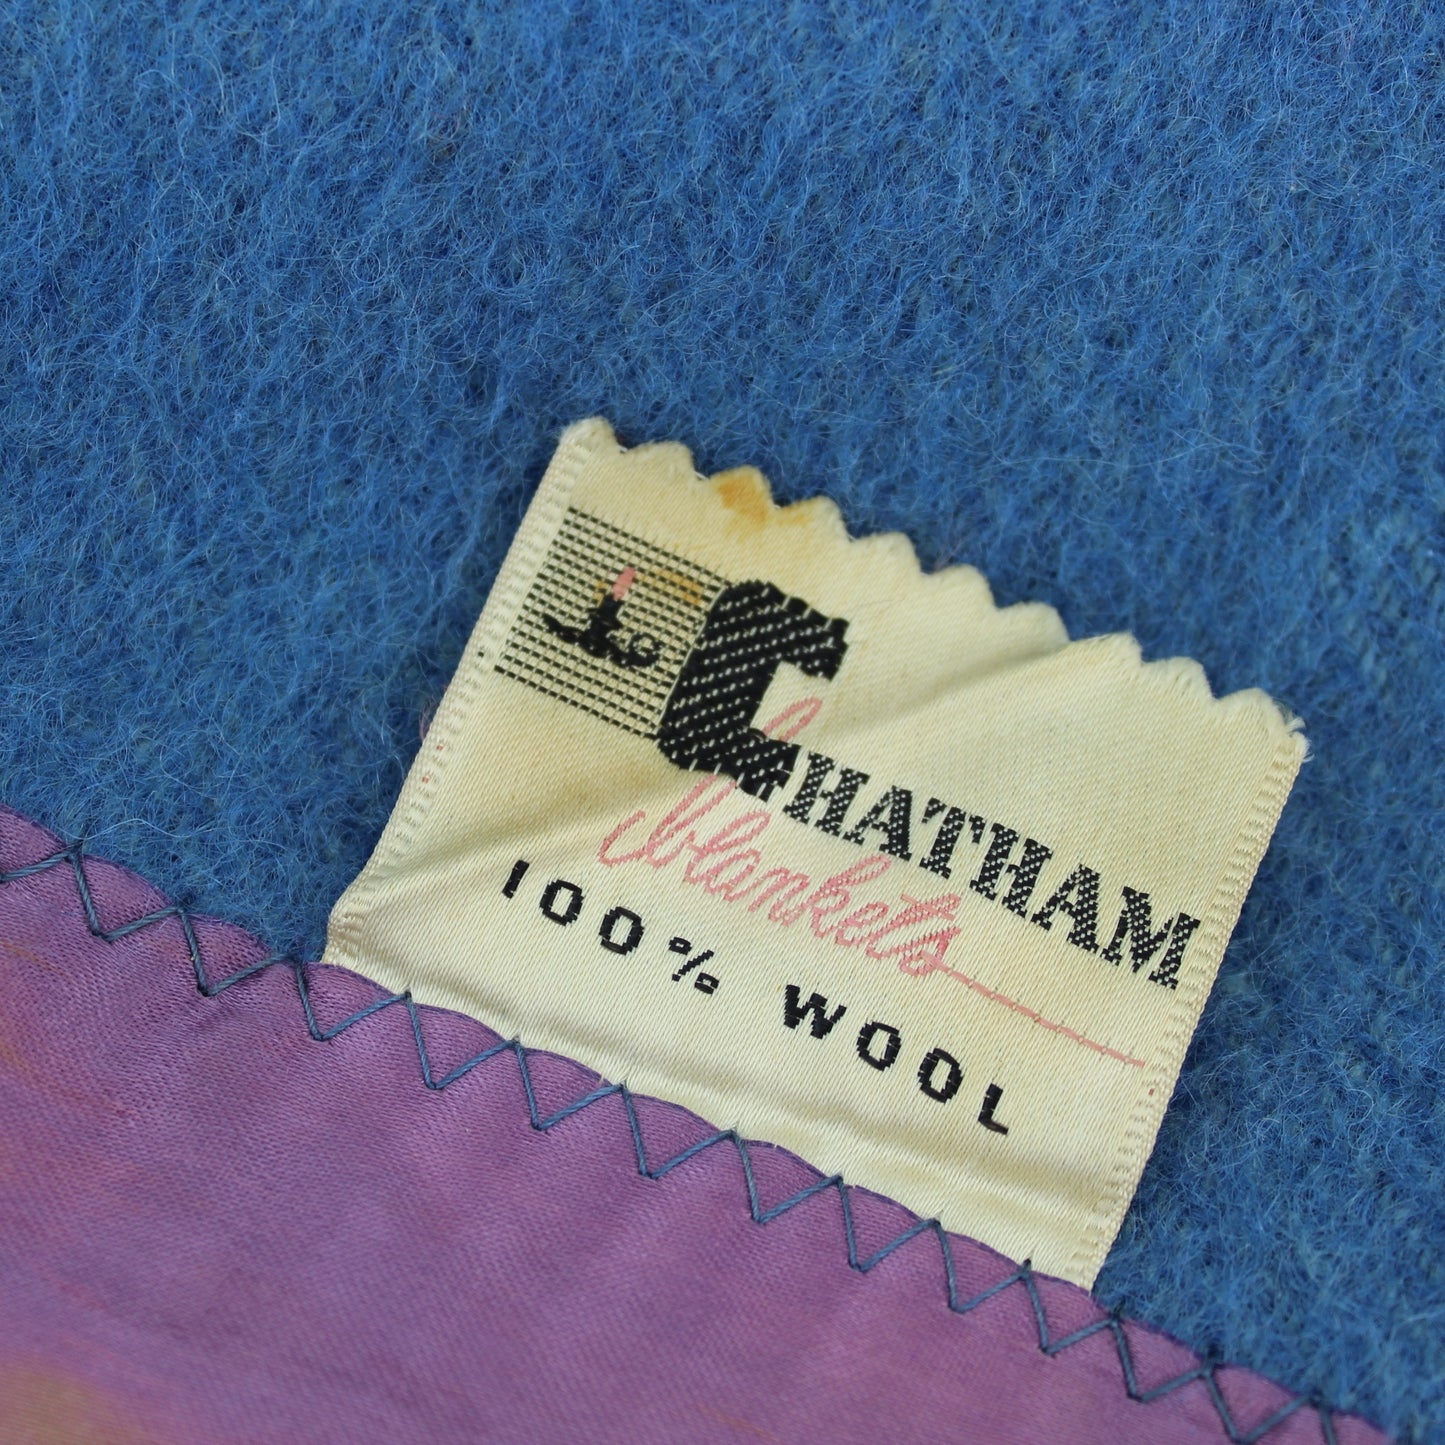 Large Chatham Wool Blanket Heavy Weight Shades of Blue 74" X 92" original ribbon tag